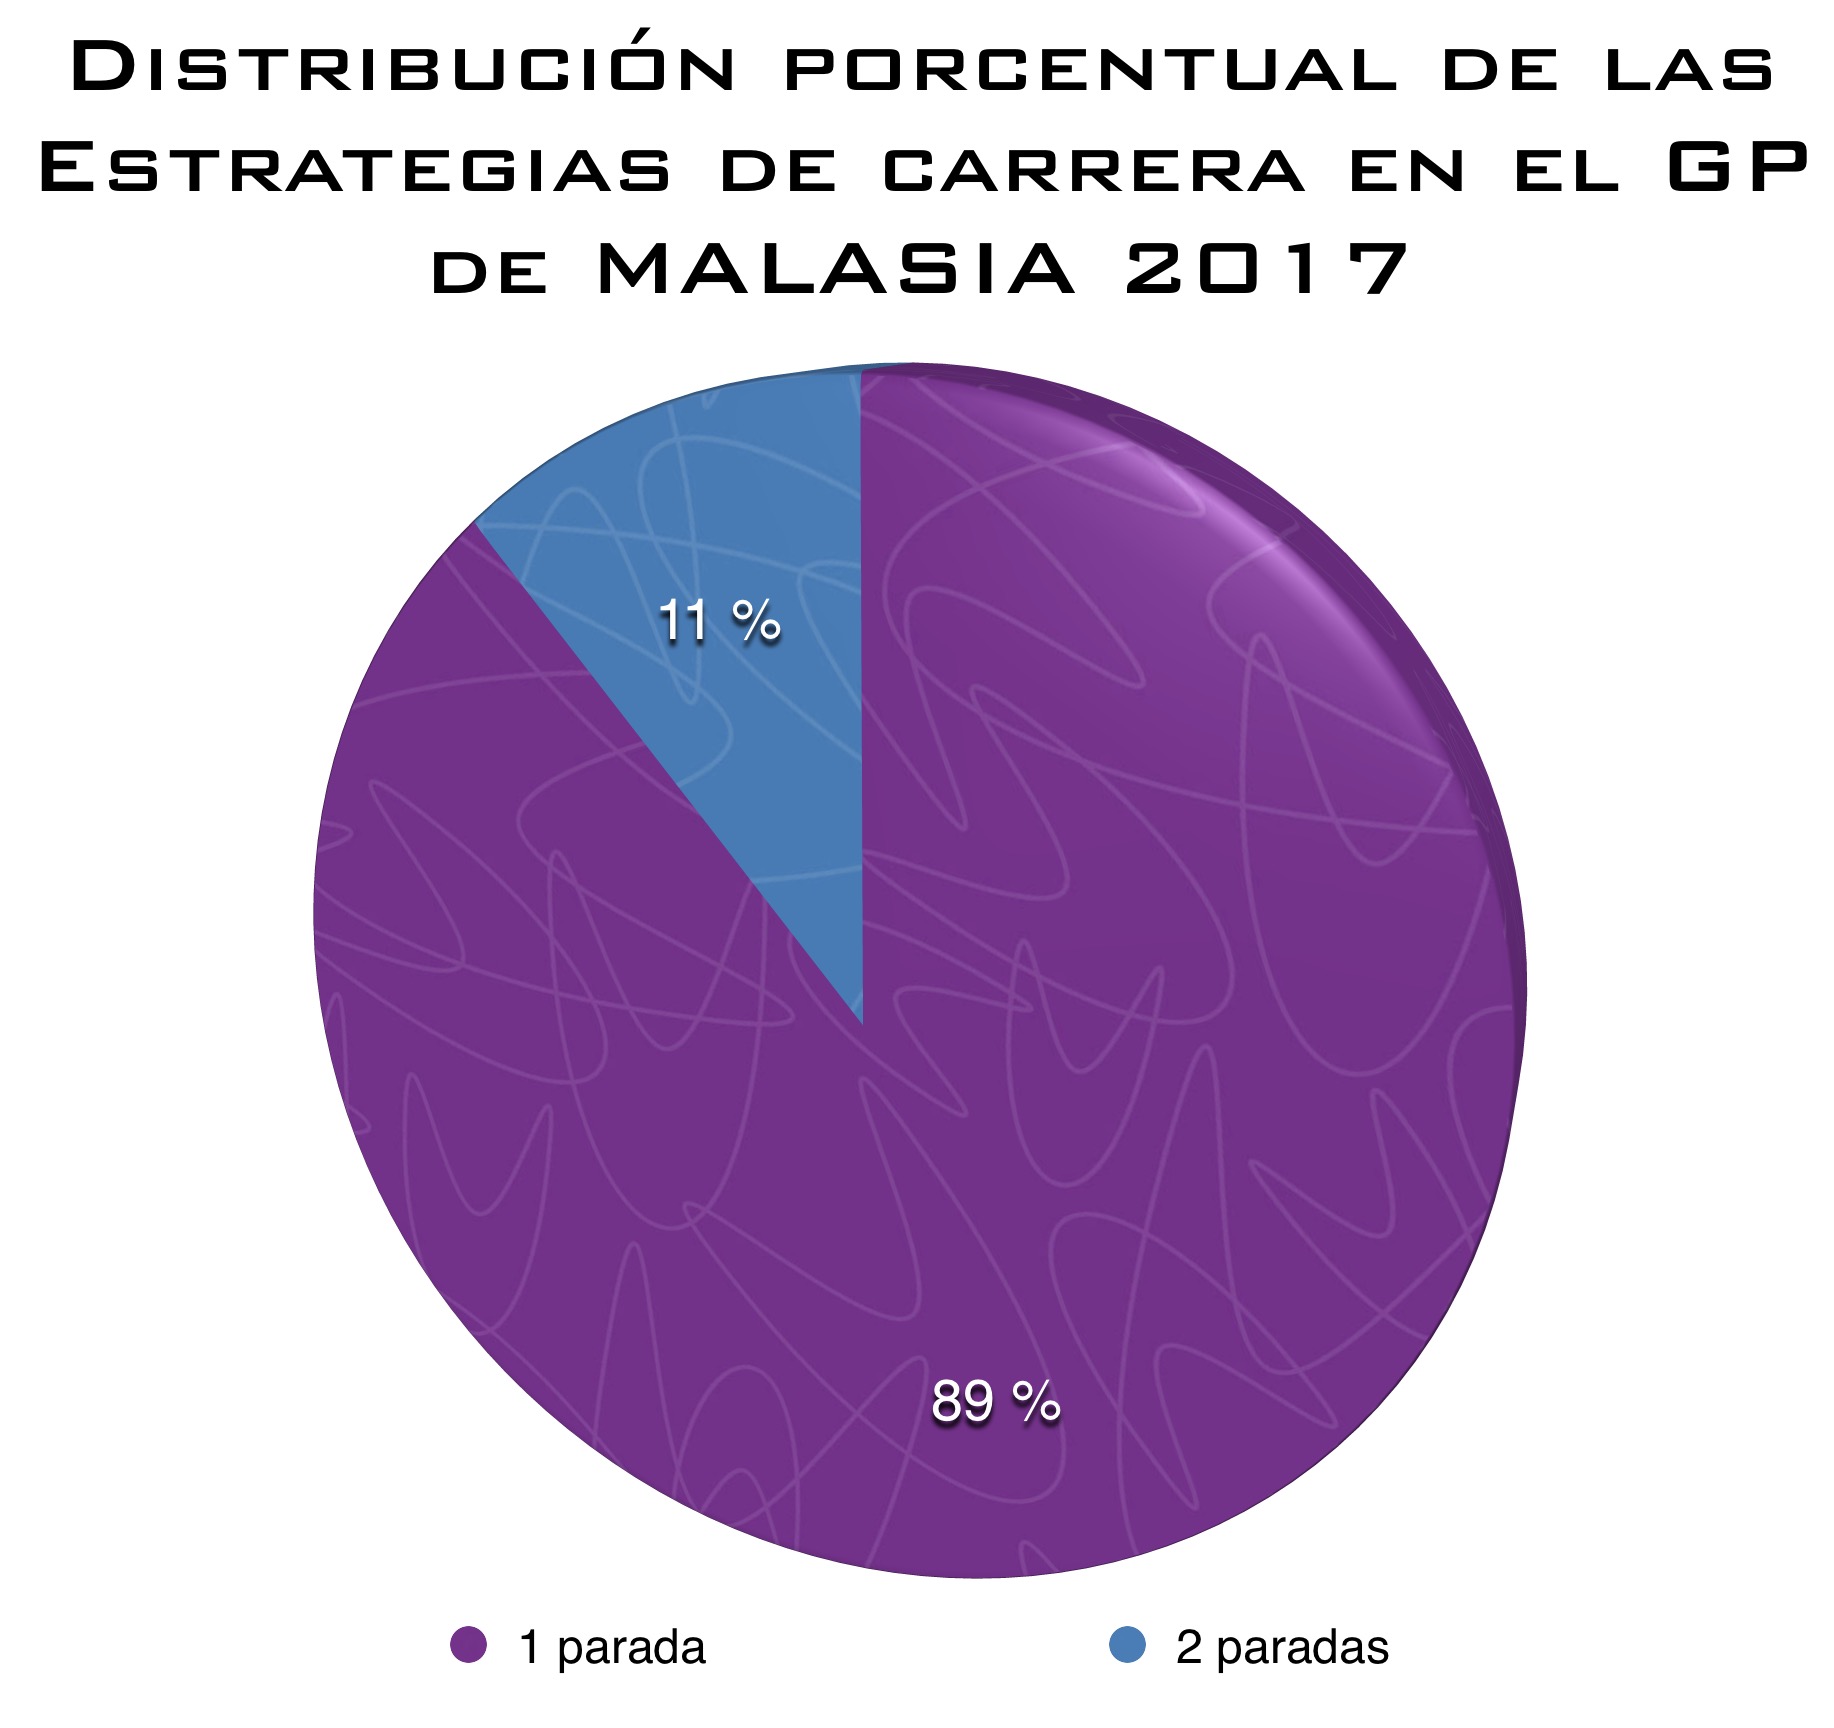 distribucion_porcentual_de_las_estrategias_de_carrera_malasia_2017.jpg